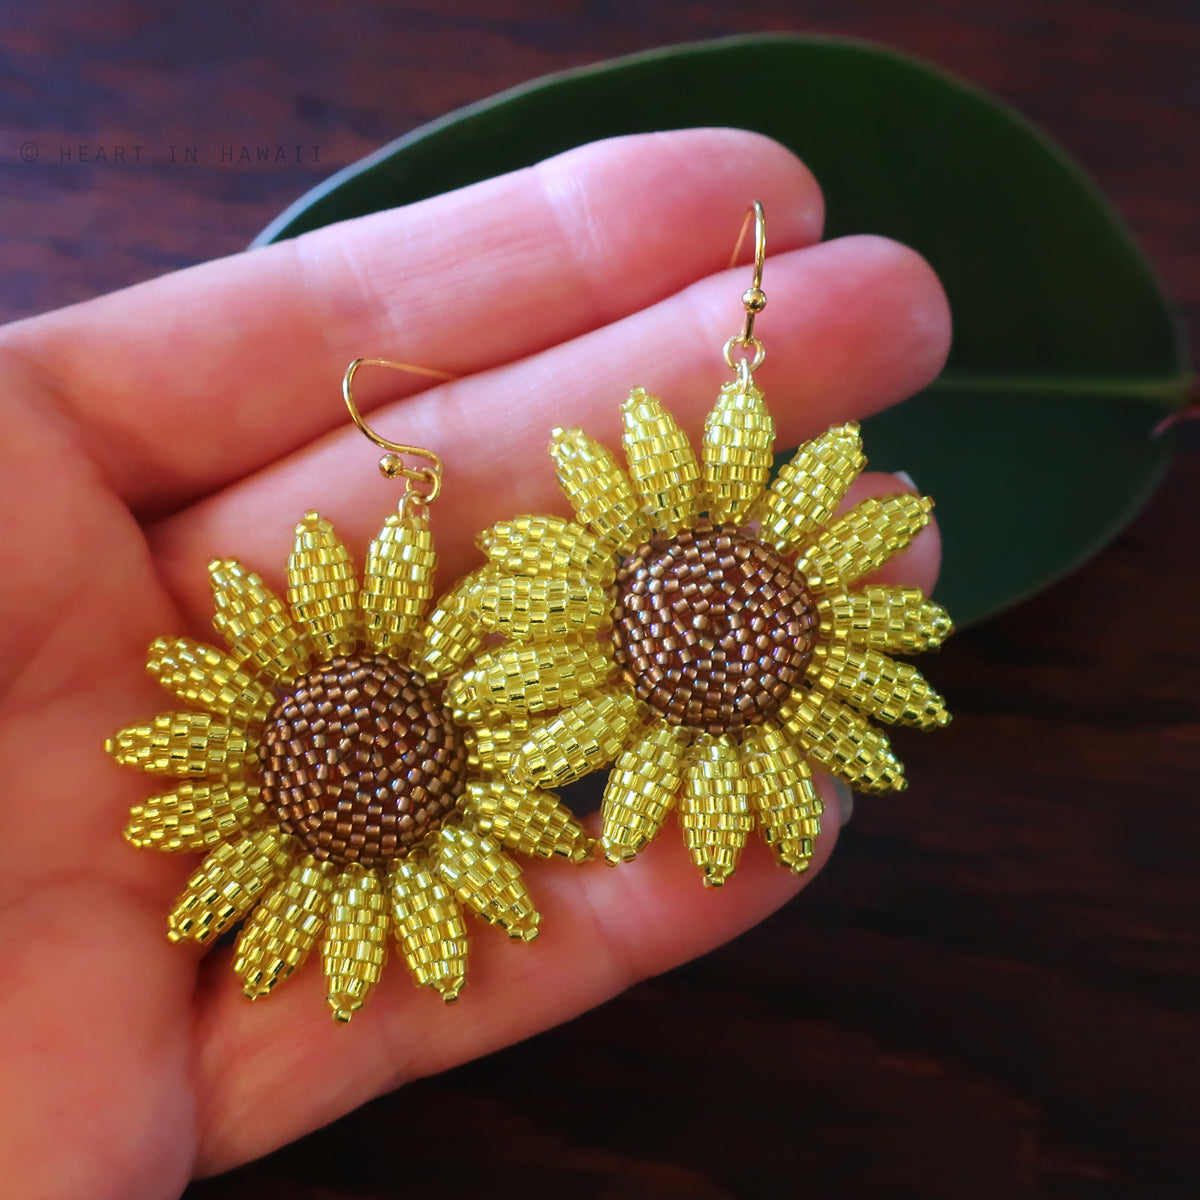 Heart in Hawaii Beaded Sunflower Earrings - Sparkly Yellow